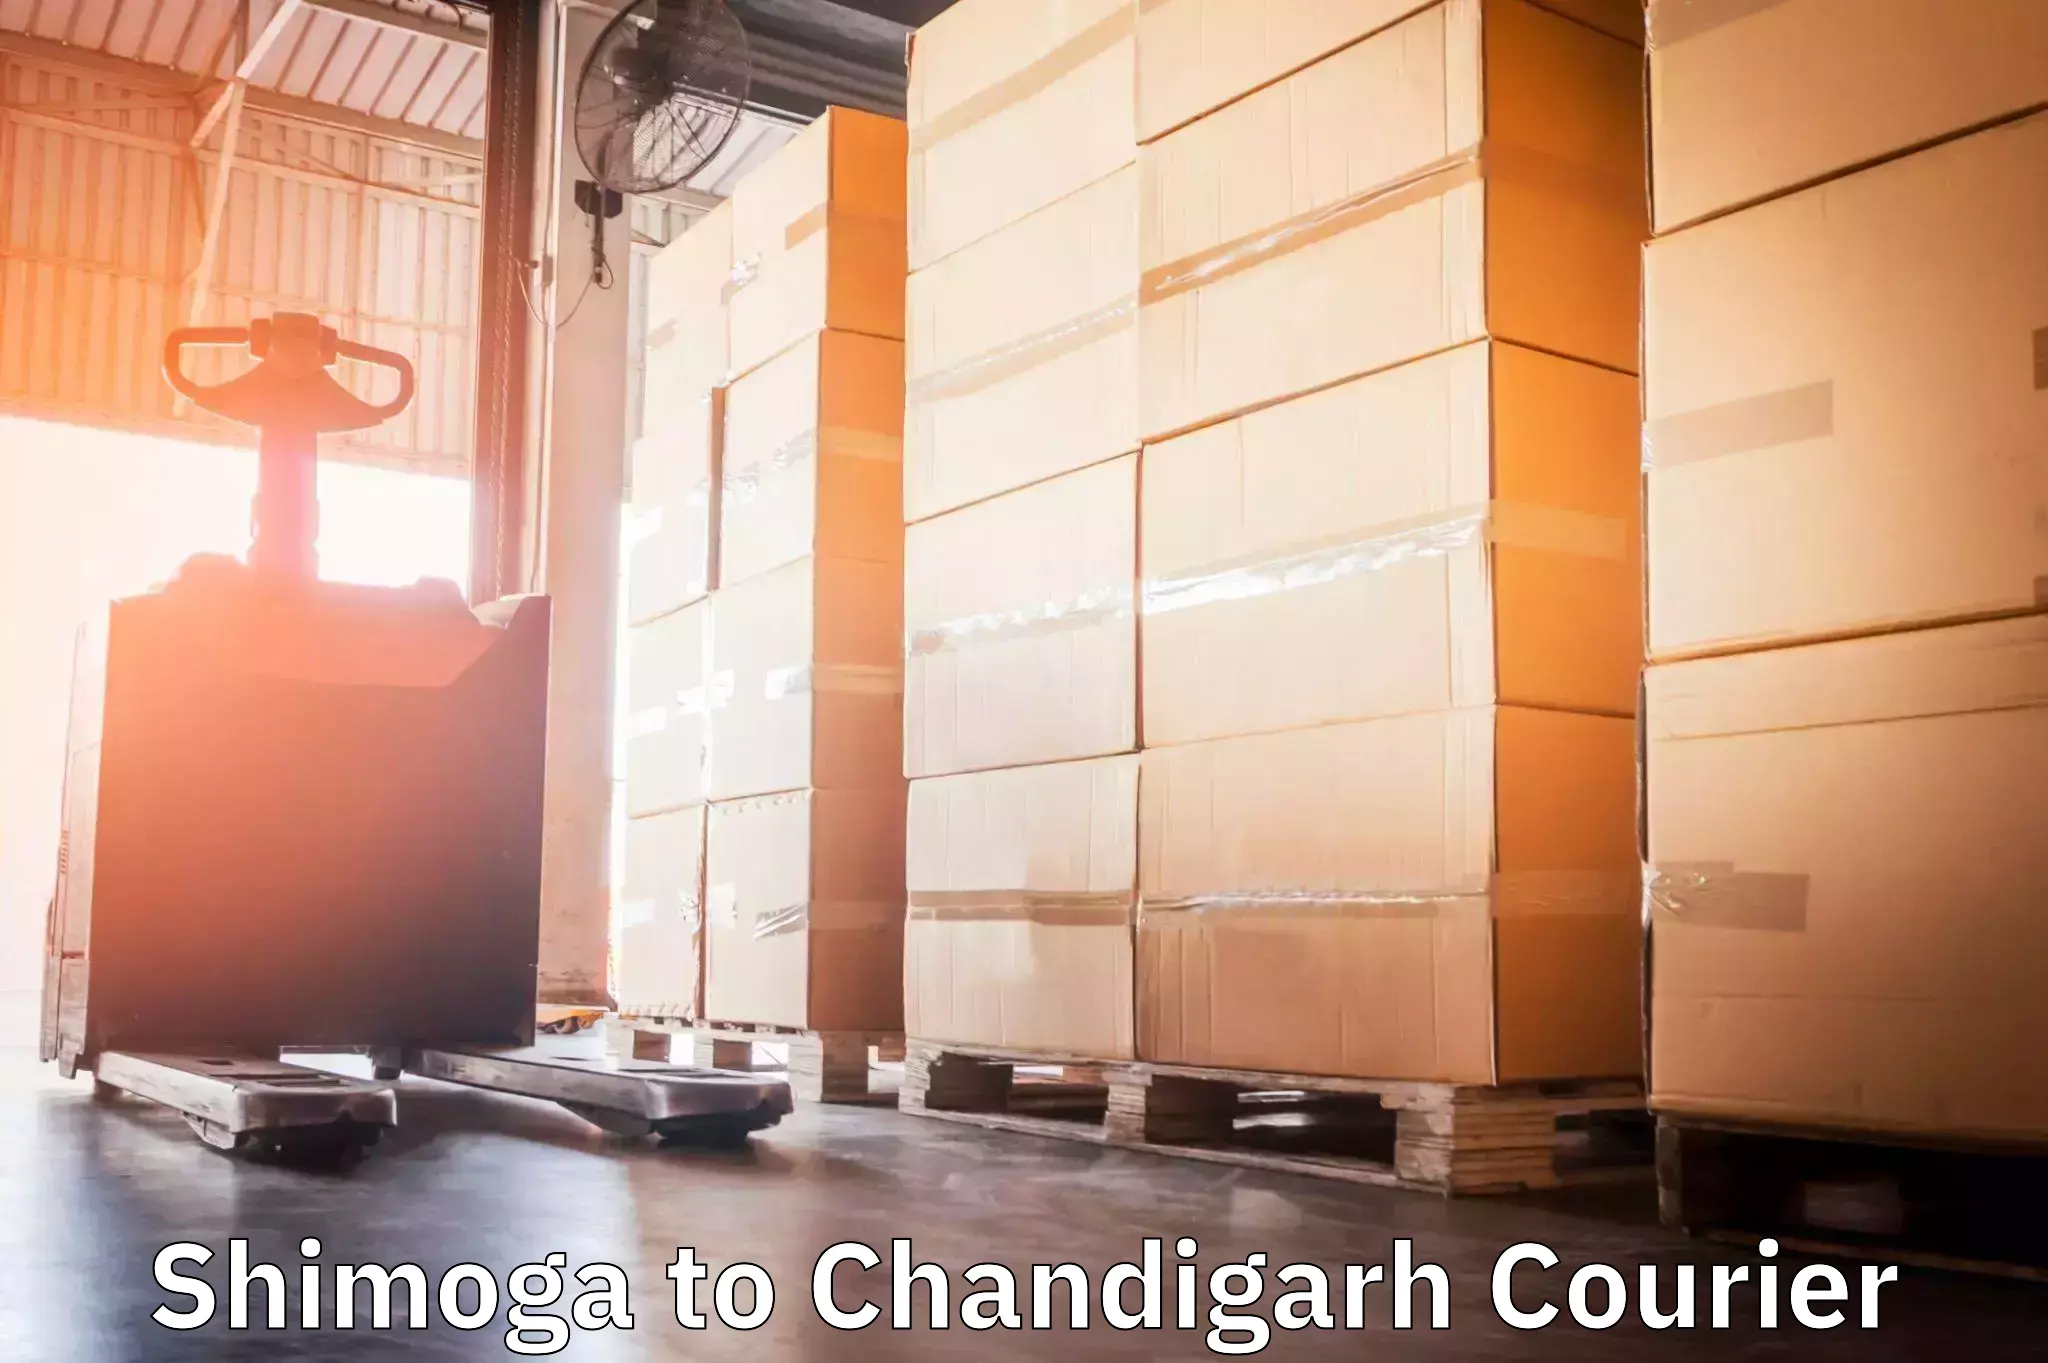 Global logistics network Shimoga to Chandigarh